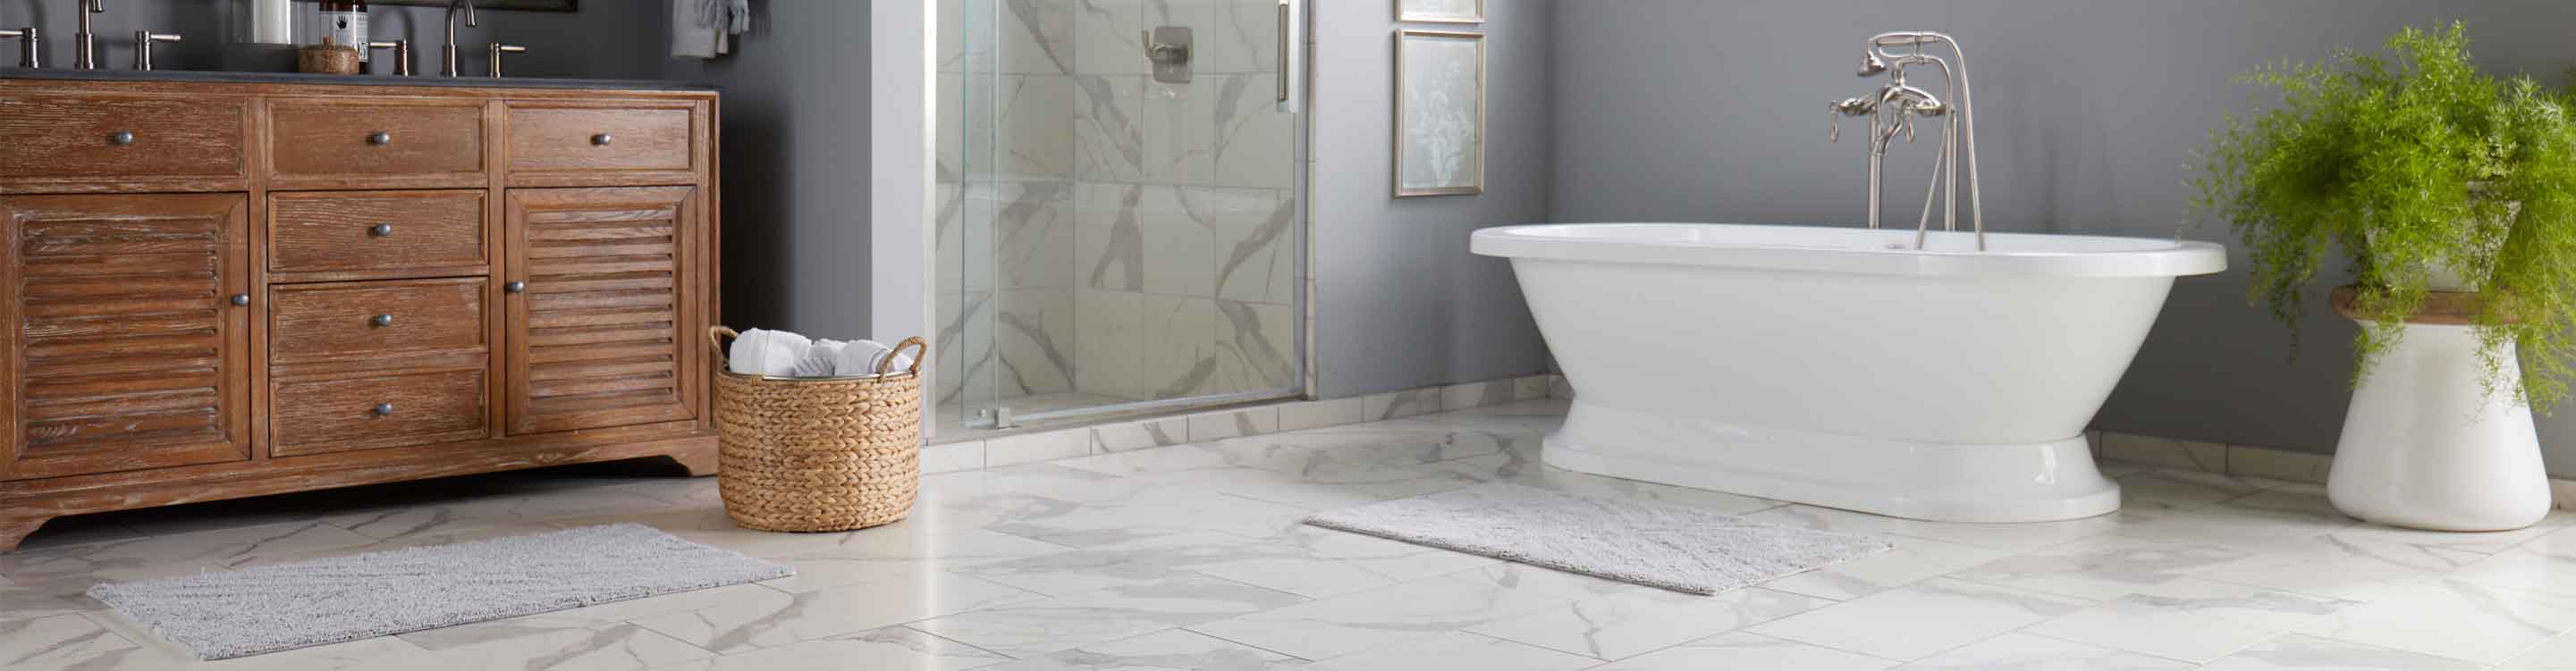 Bathroom with marble look tile flooring and freestanding bathtub